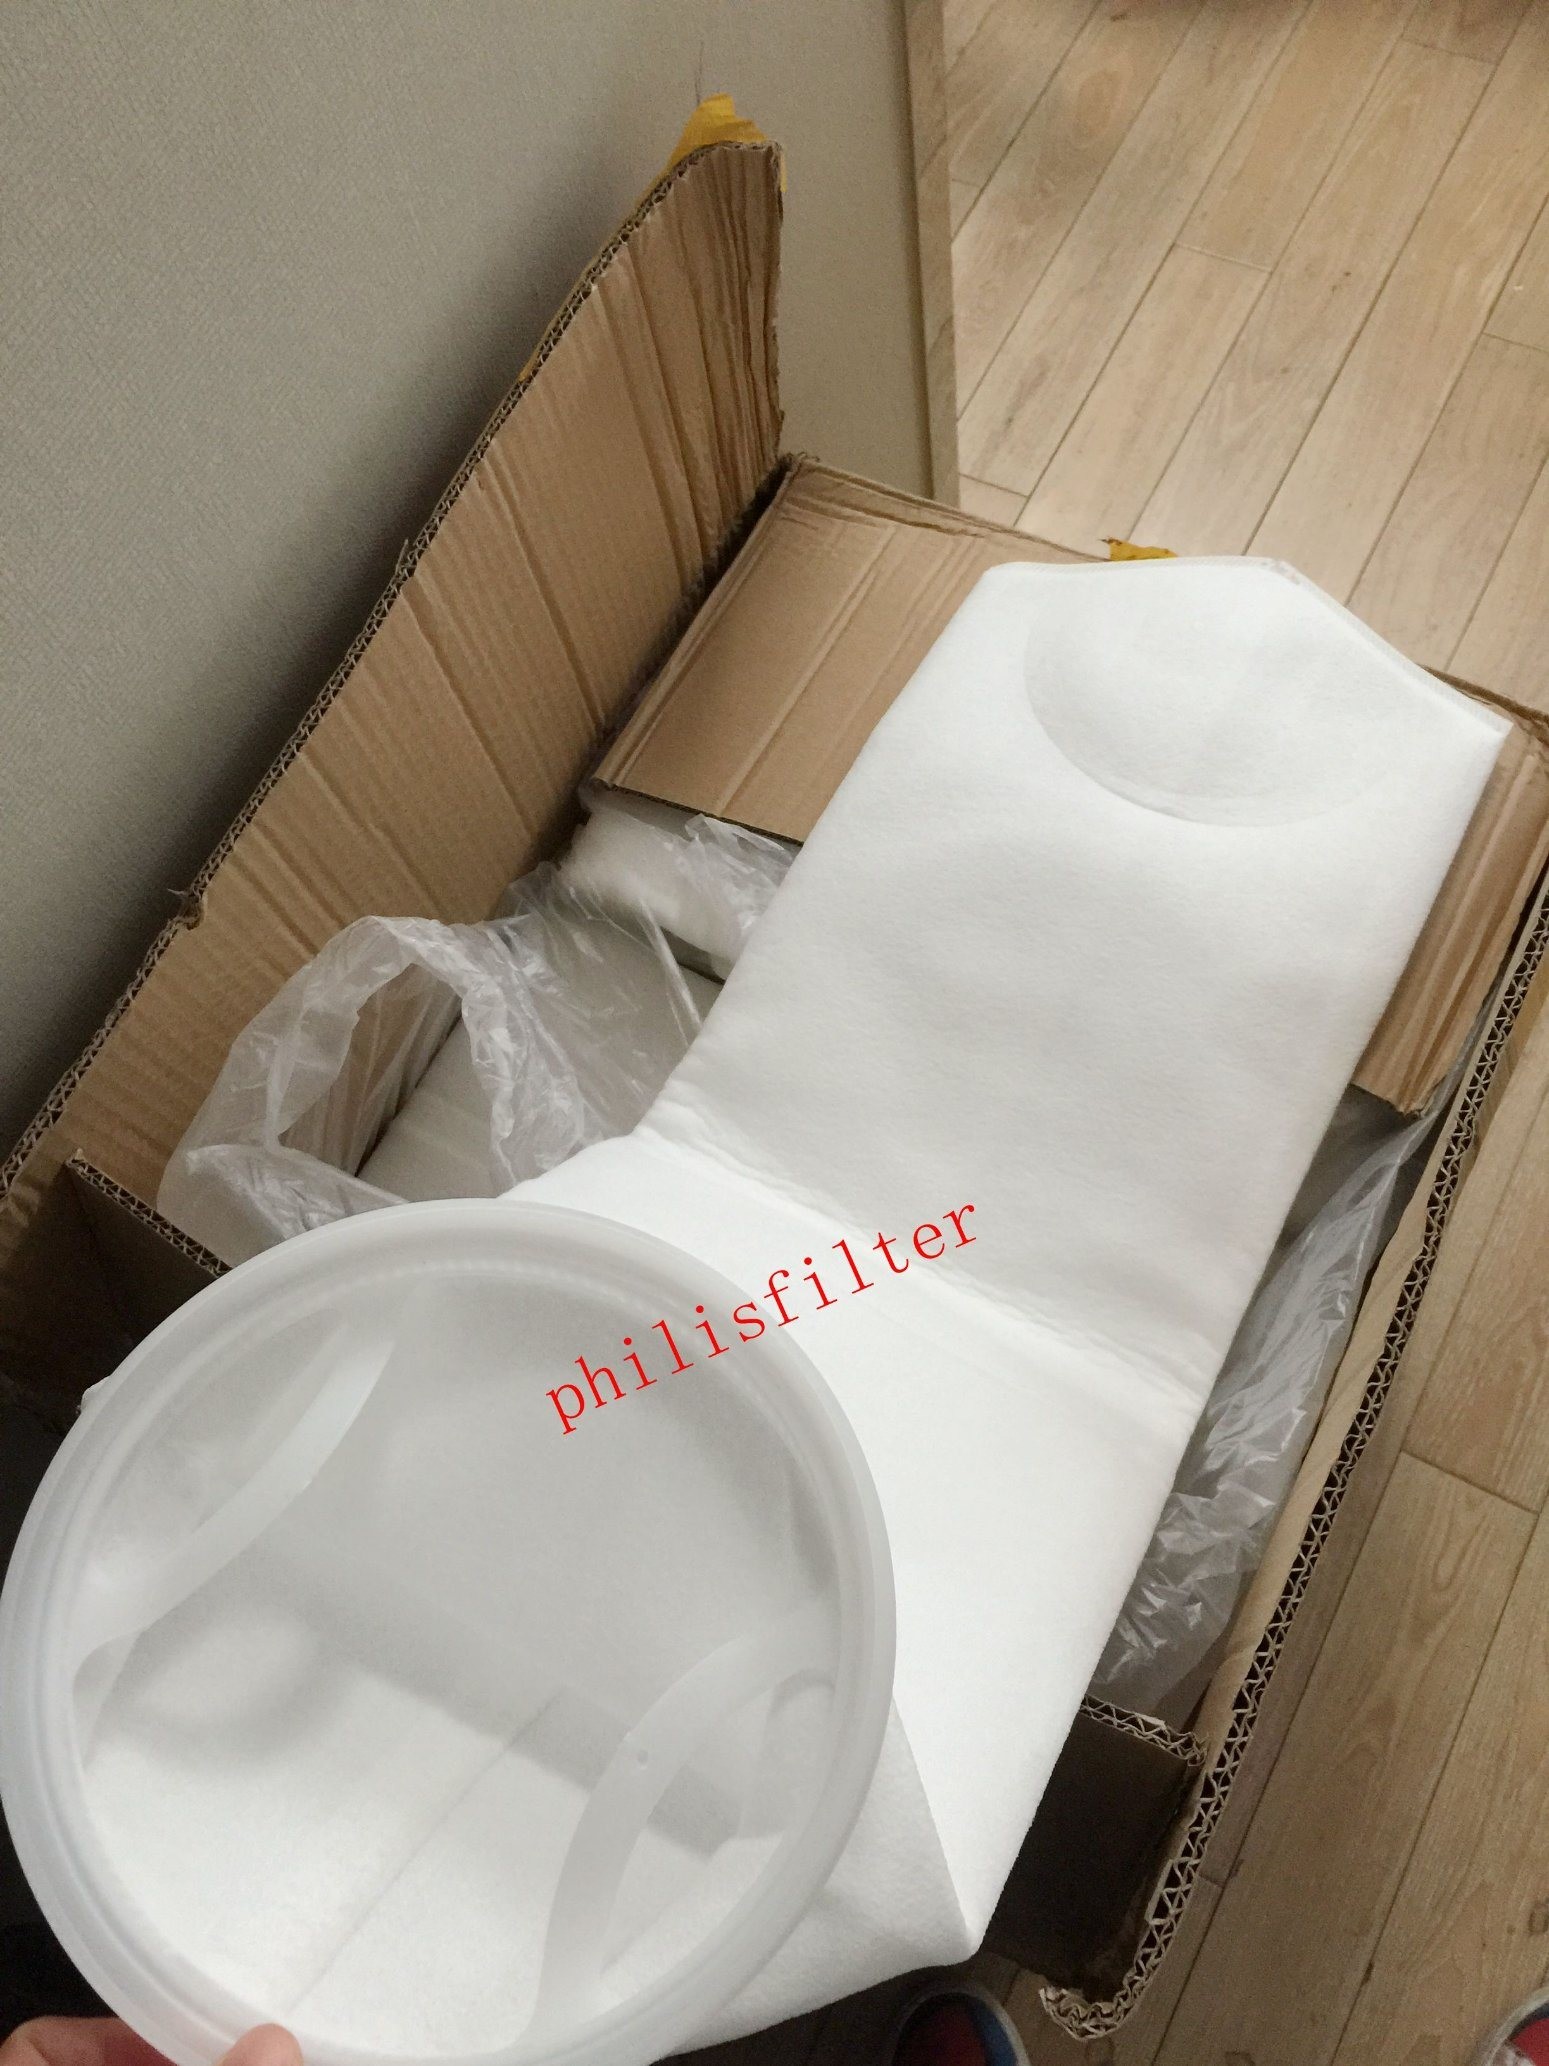 Quality Medium Liquid Filter Bag , PE PP Polypropylene Filter Bag for sale